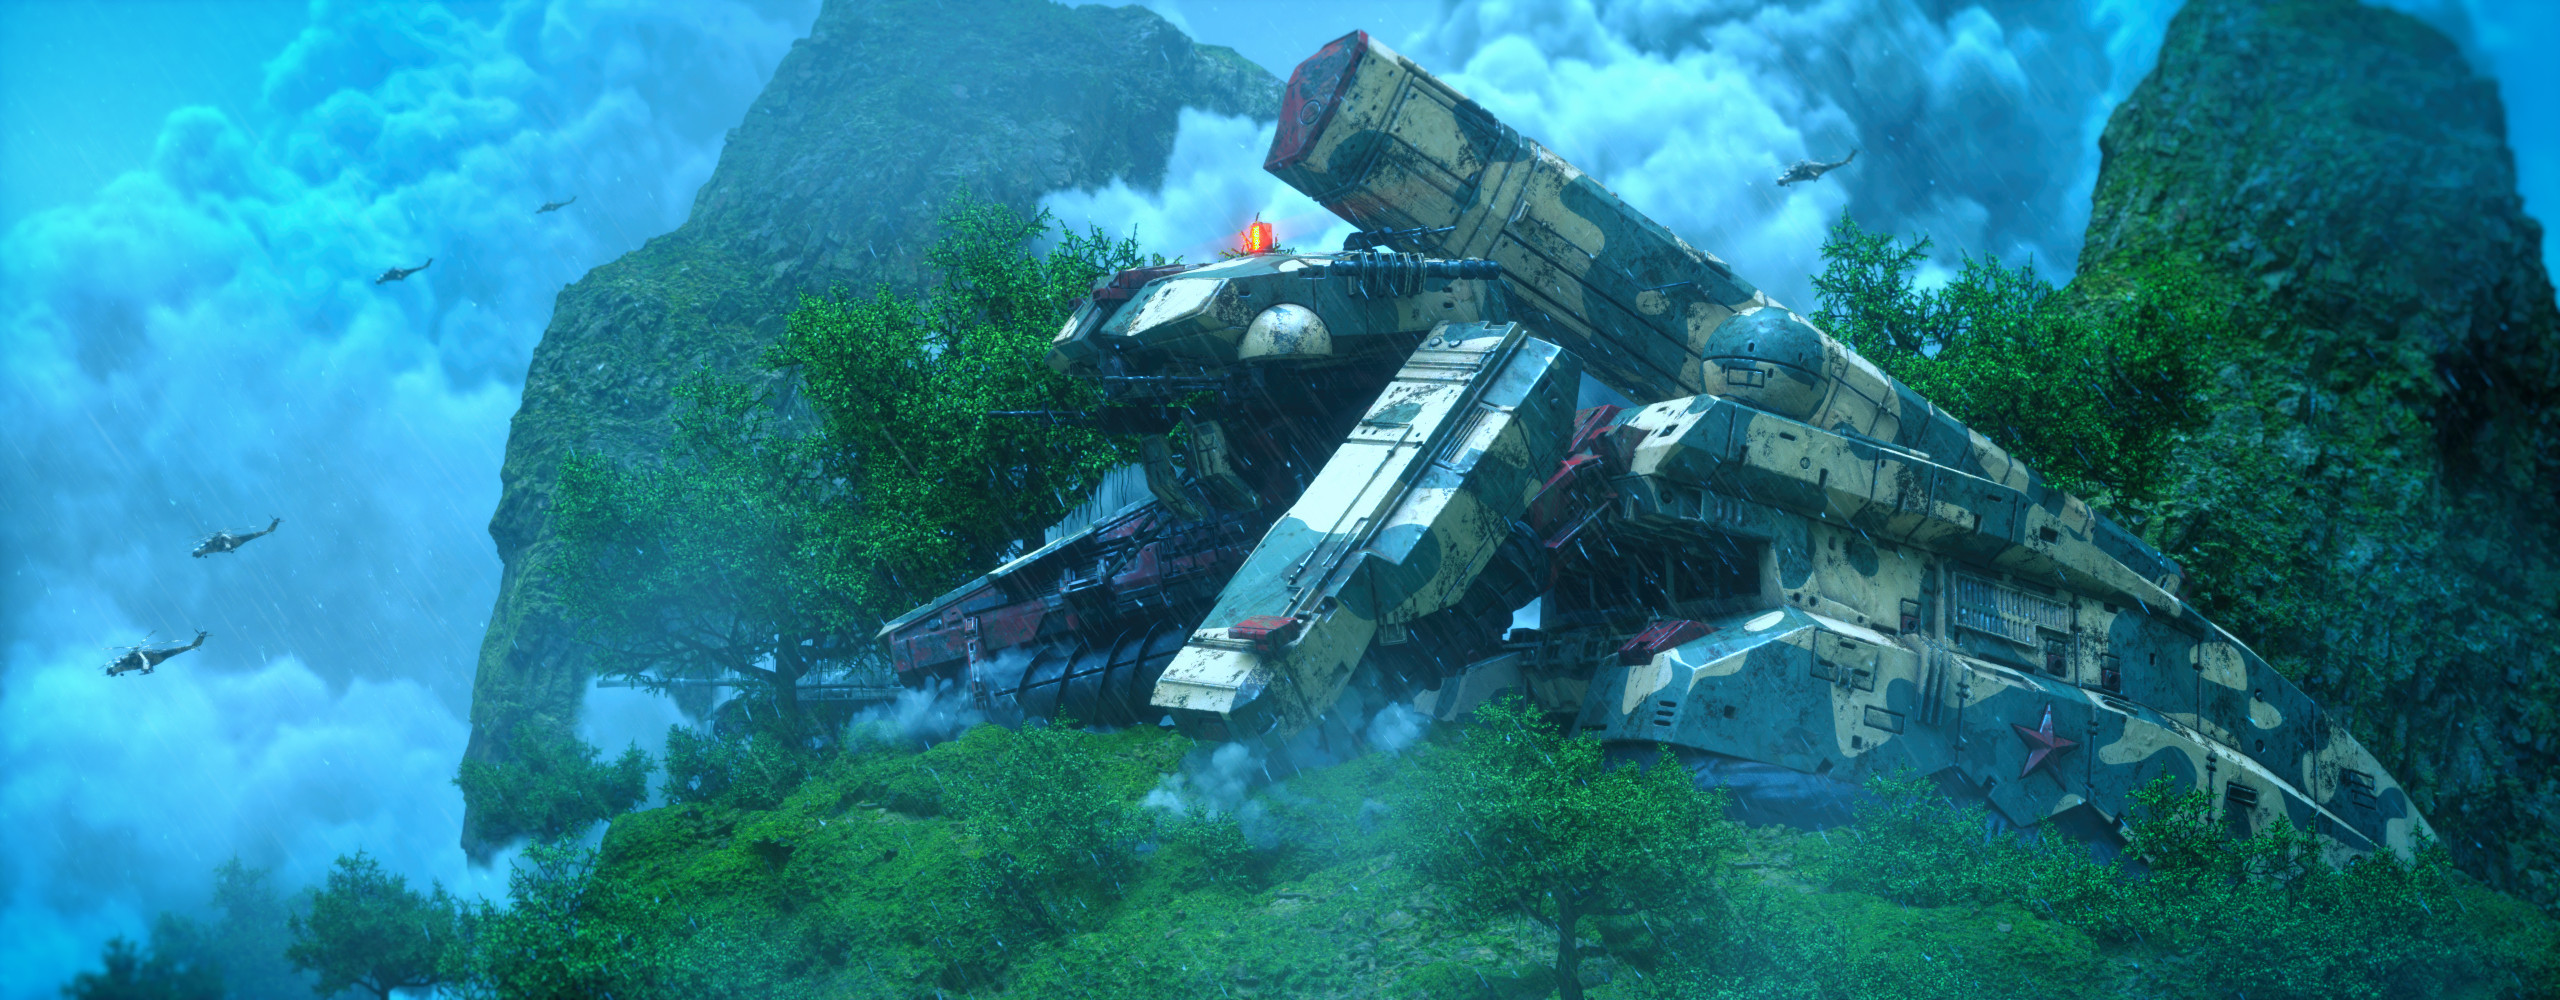 ArtStation Metal Gear Video Games Video Game Art Vehicle Tank Ben Nicholas 2560x1000